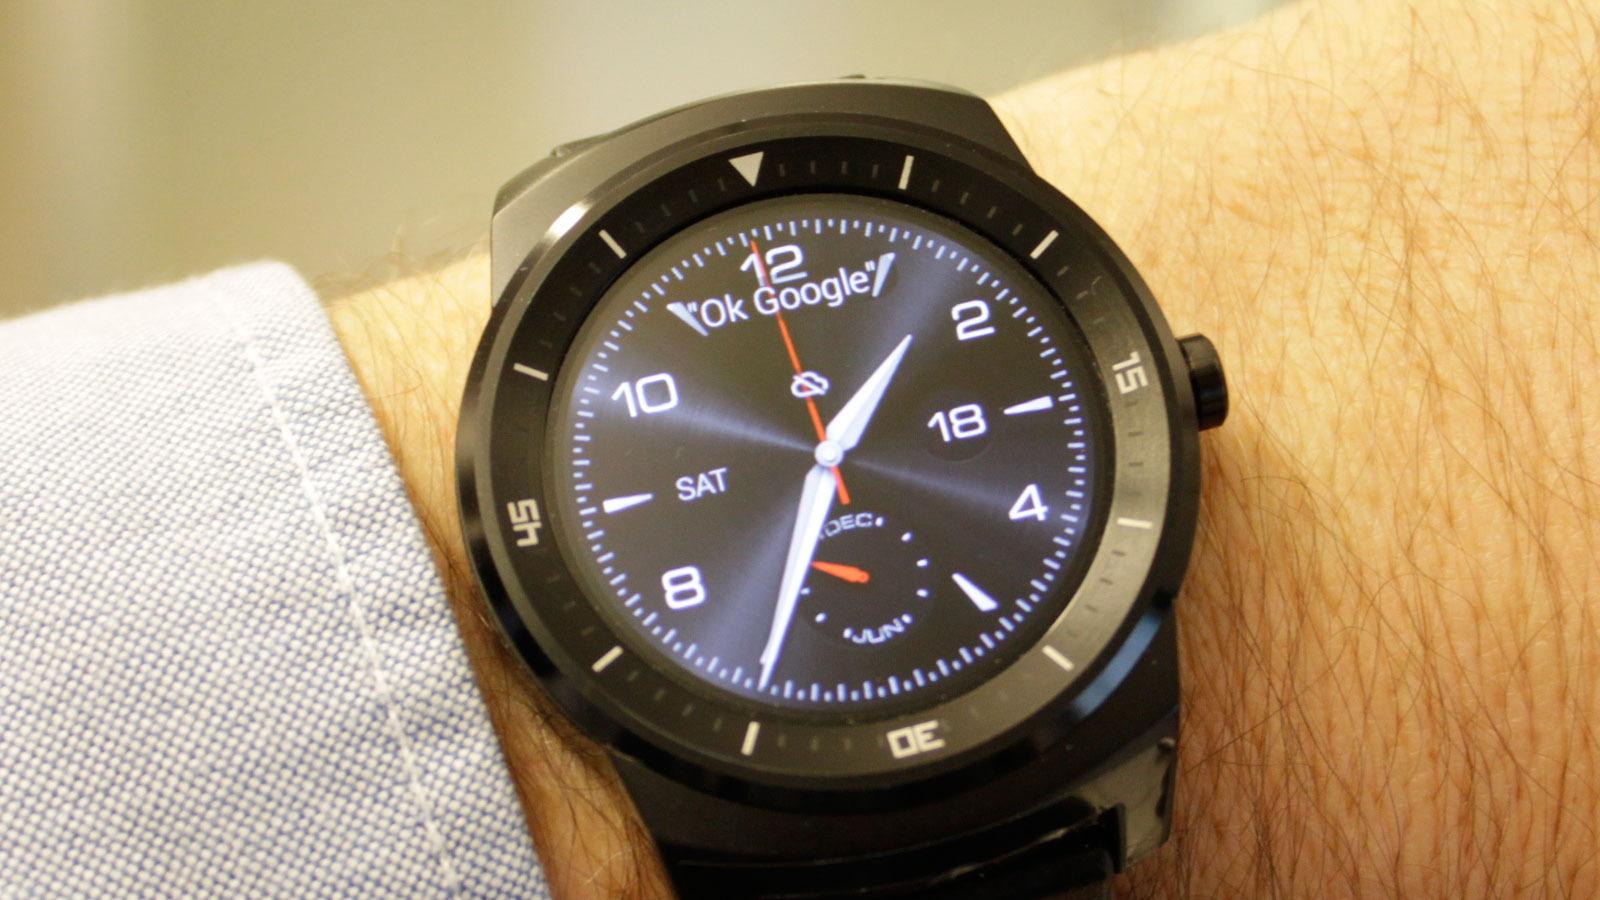 LG G Watch R kjører Android Wear-operativsystemet. . Foto: Espen Irwing Swang, Tek.no